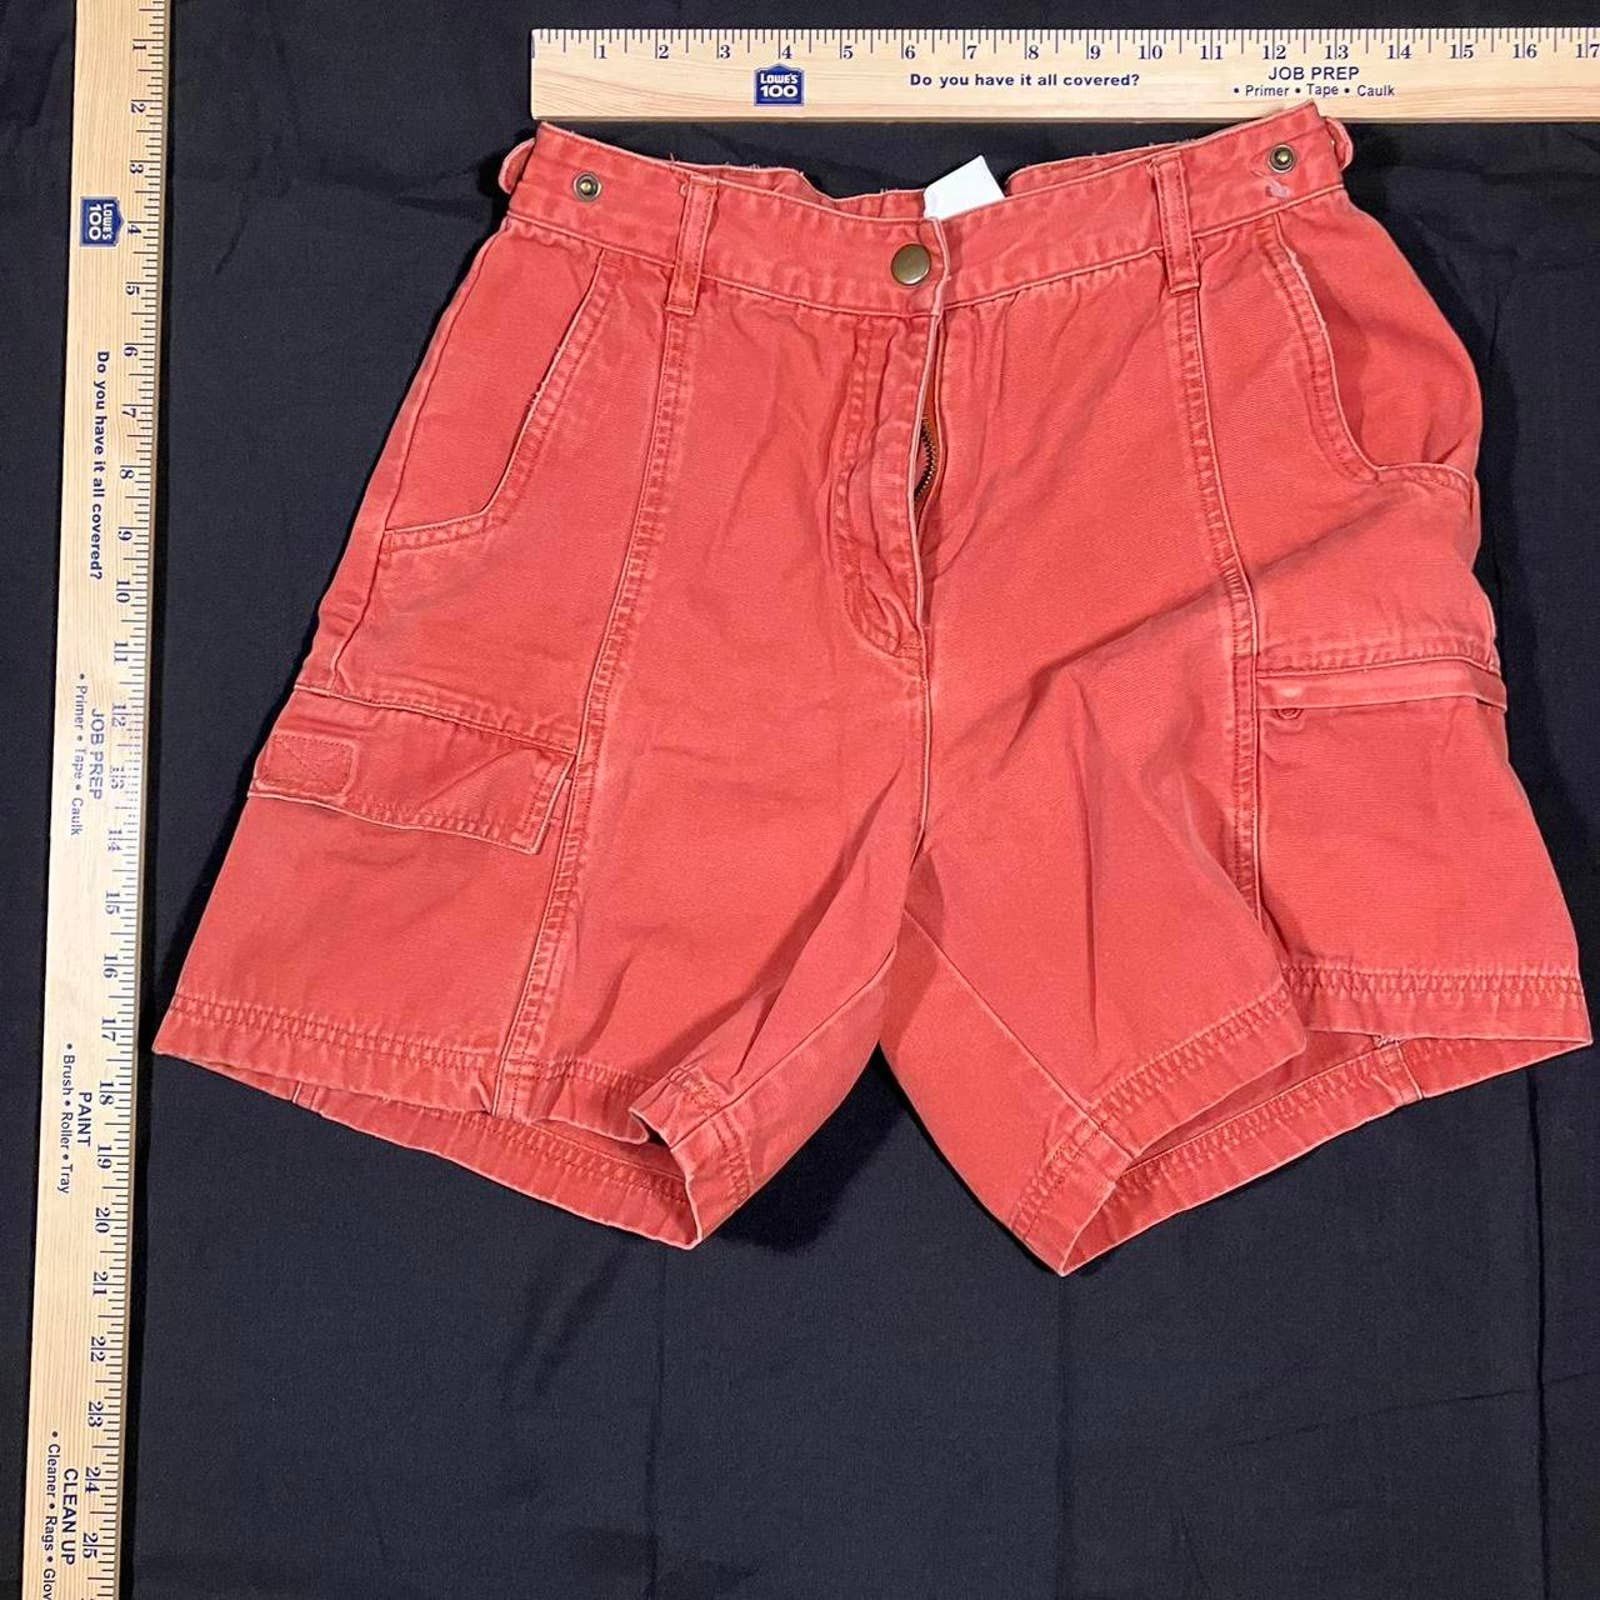 Woolrich Woolen Mills Woolrich Red Orange Canvas Cargo Shorts Size 30" / US 8 / IT 44 - 2 Preview